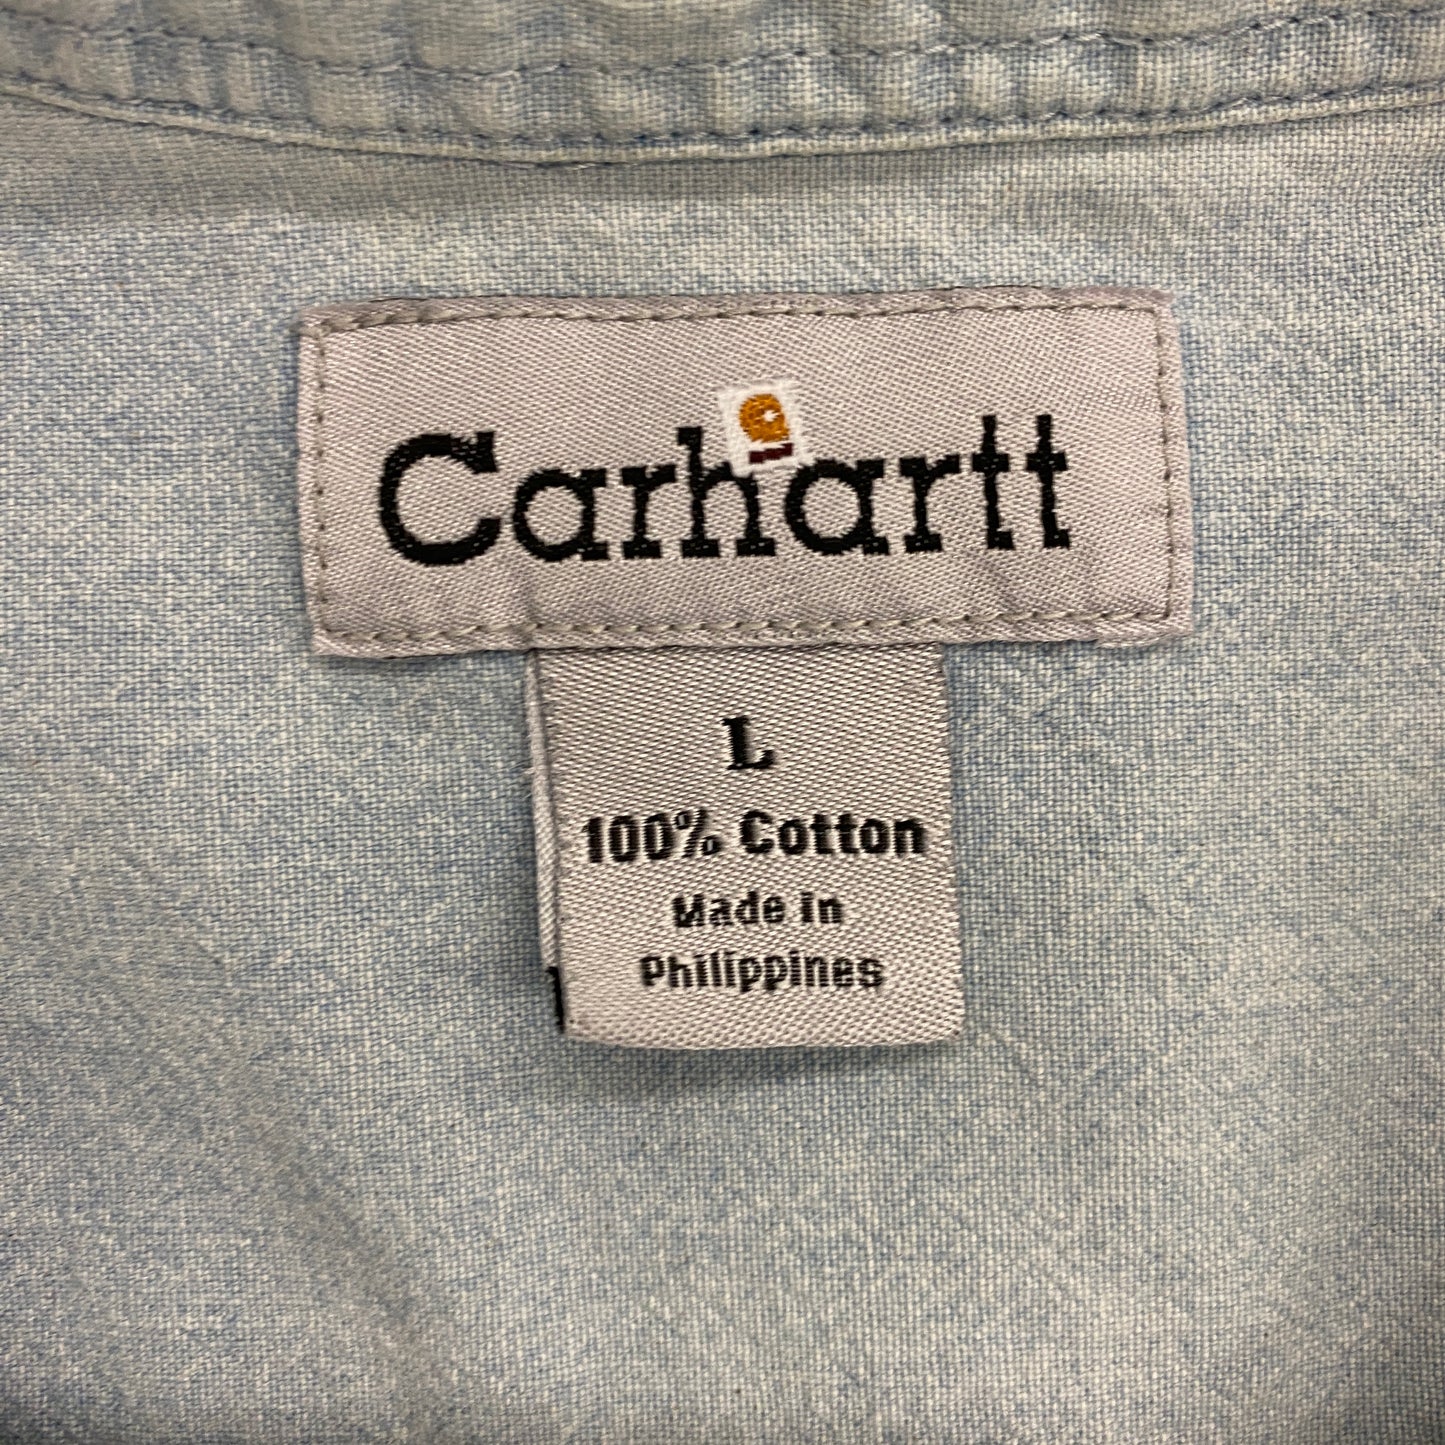 Y2K Carhartt Light Wash Denim Short Sleeve Button Up - Size Large